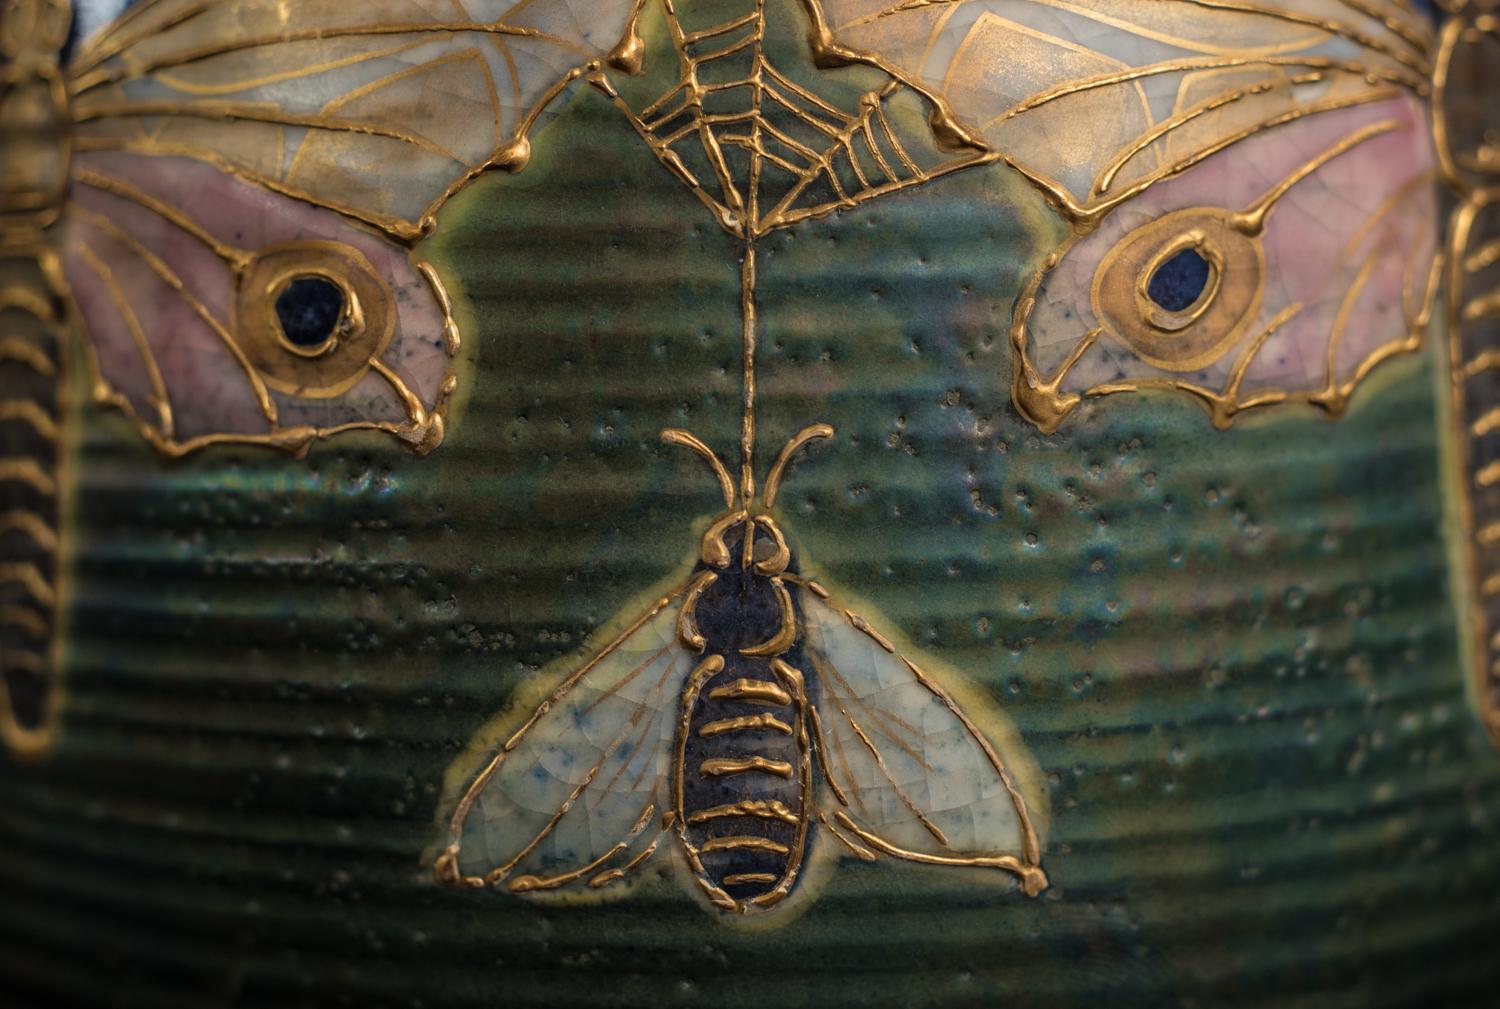 Butterflies and Bees Amphora Semiramis Vase - Art Nouveau Art by Alfred Stellmacher